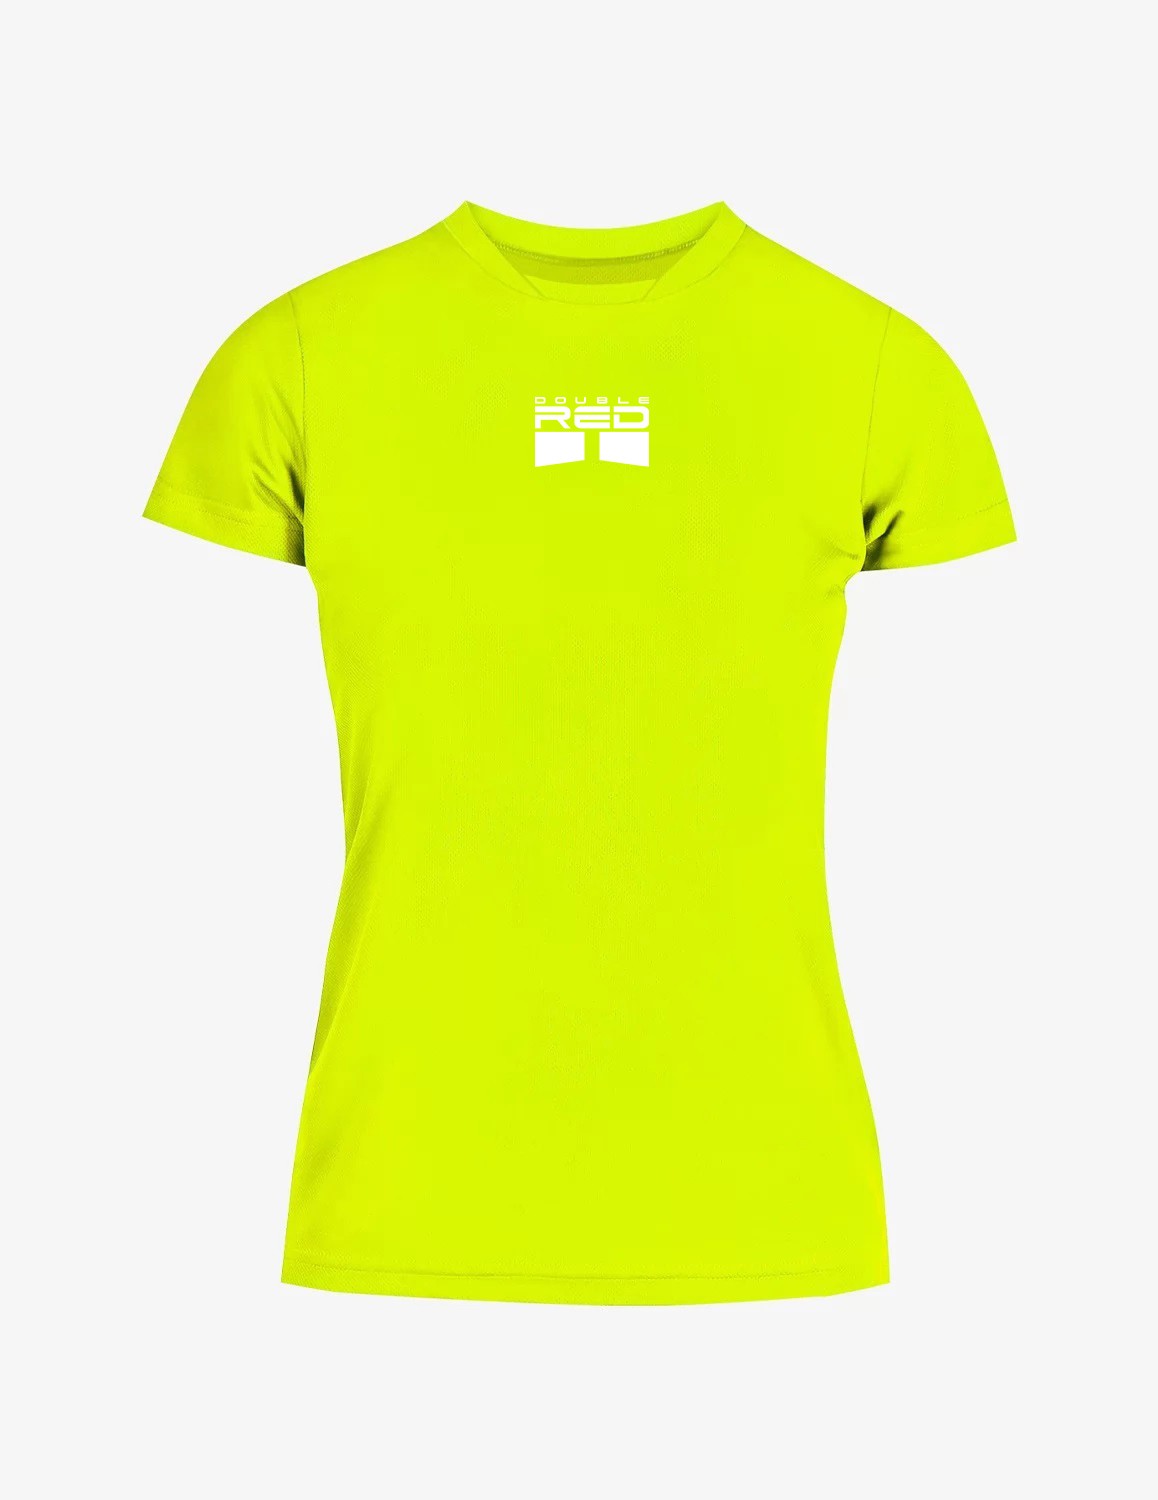 T-shirt CARBONARO™ KID SPORT AIR TECH PRO Neon Yellow